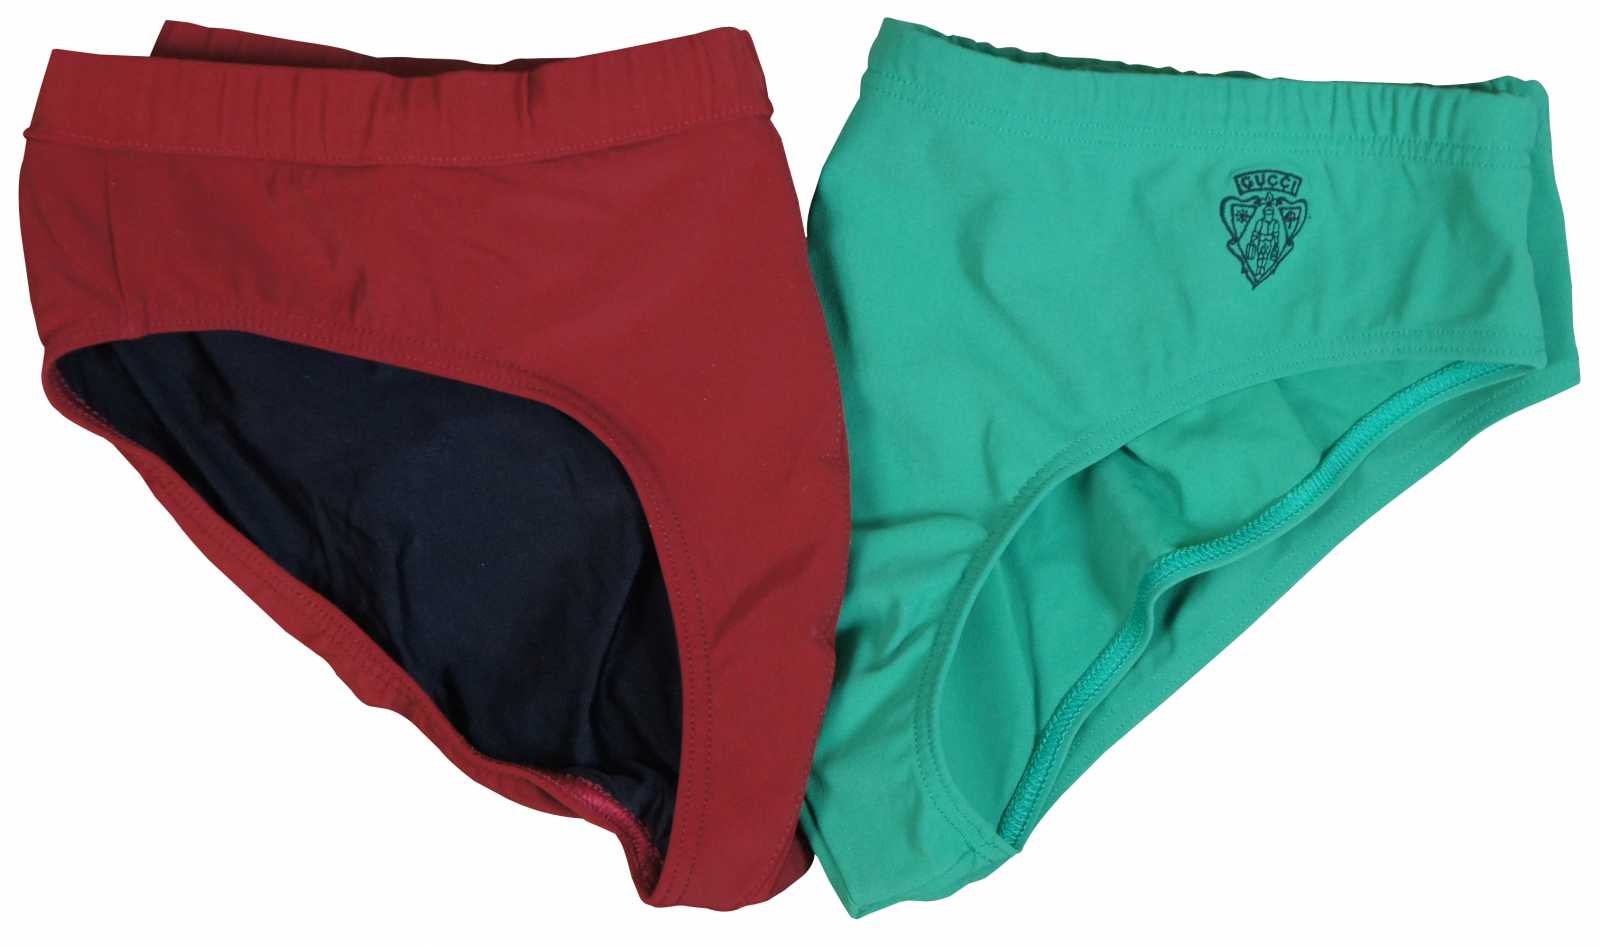 ude af drift Hvad Stå på ski 2 Gucci Mens Swimwear Swim Briefs Bikini Cut Speedos Medium Large Red Green